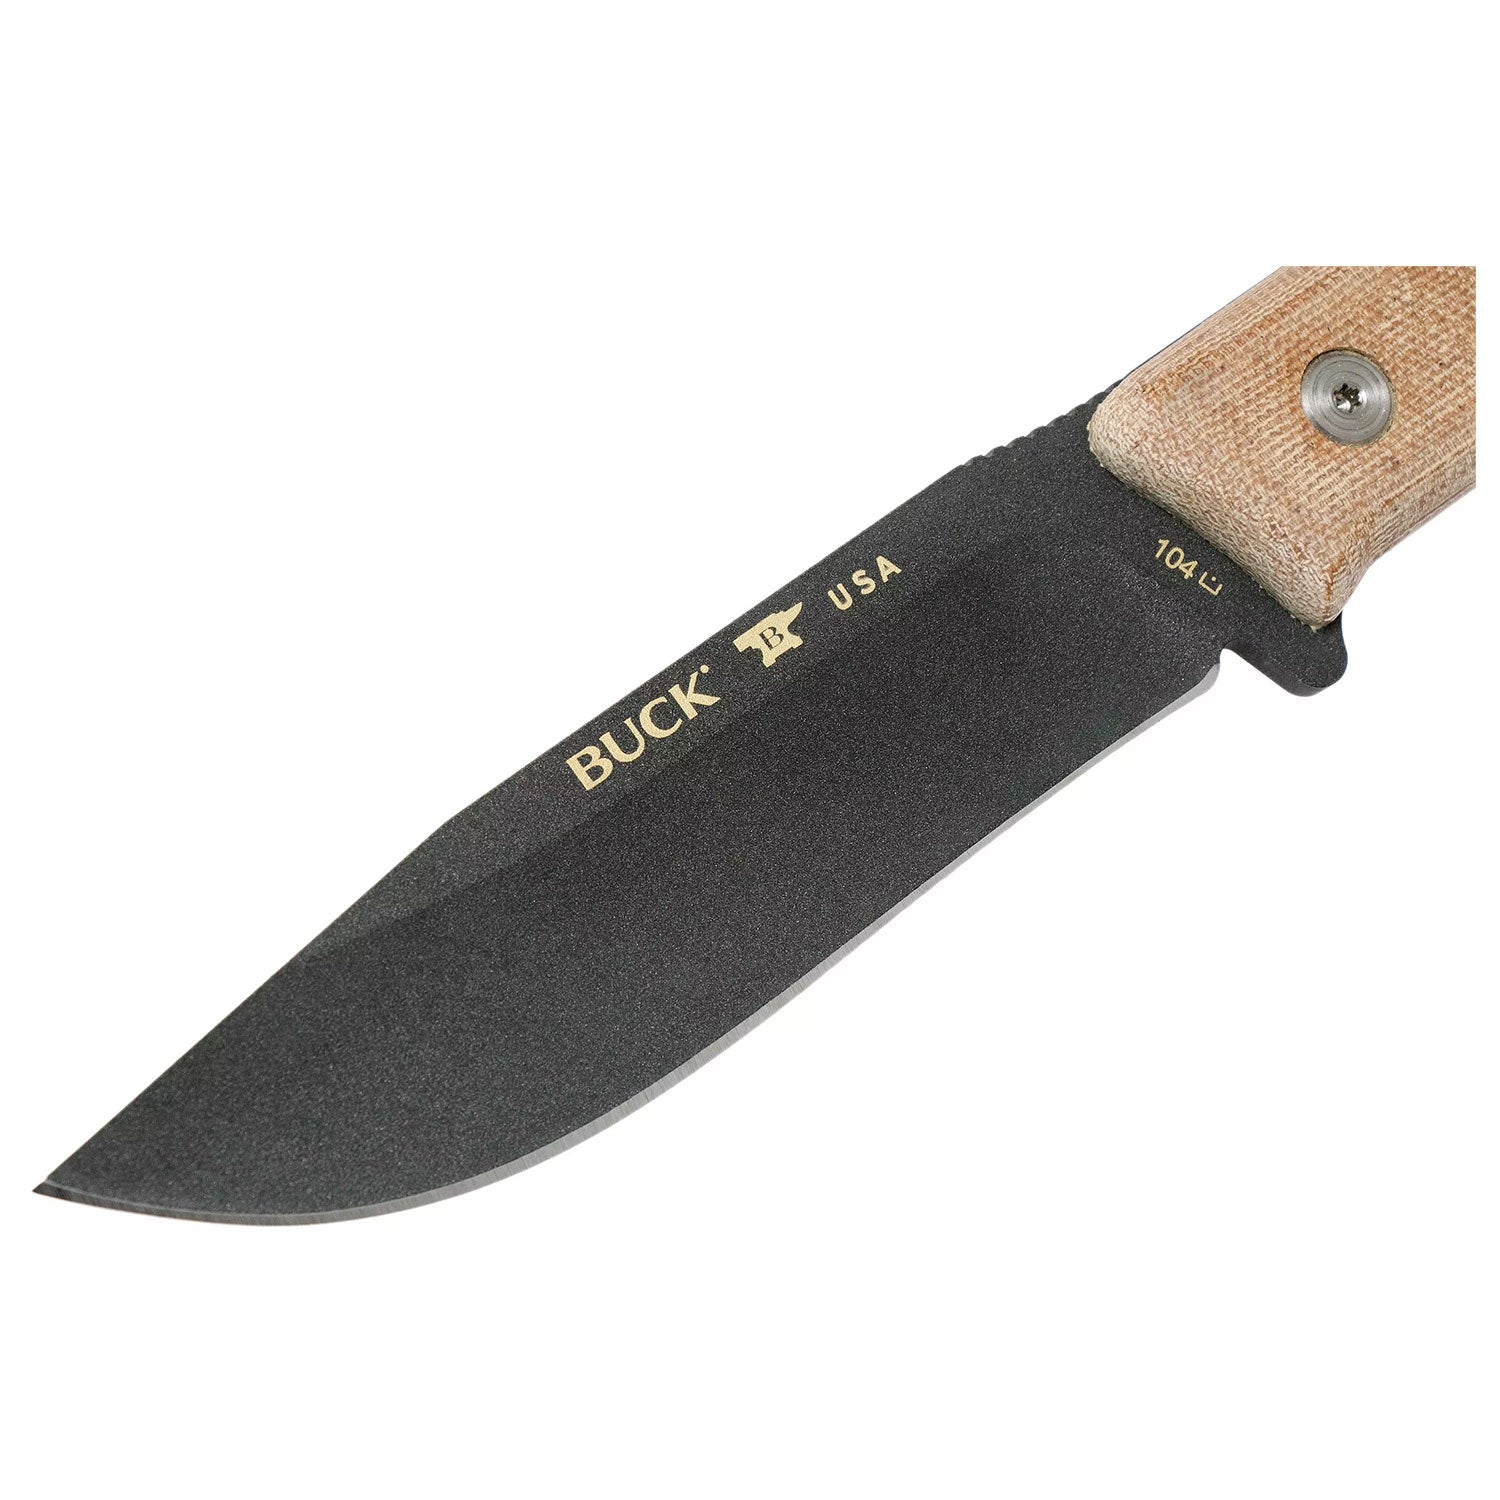 USA Blade Buck Compadre Camp Knife